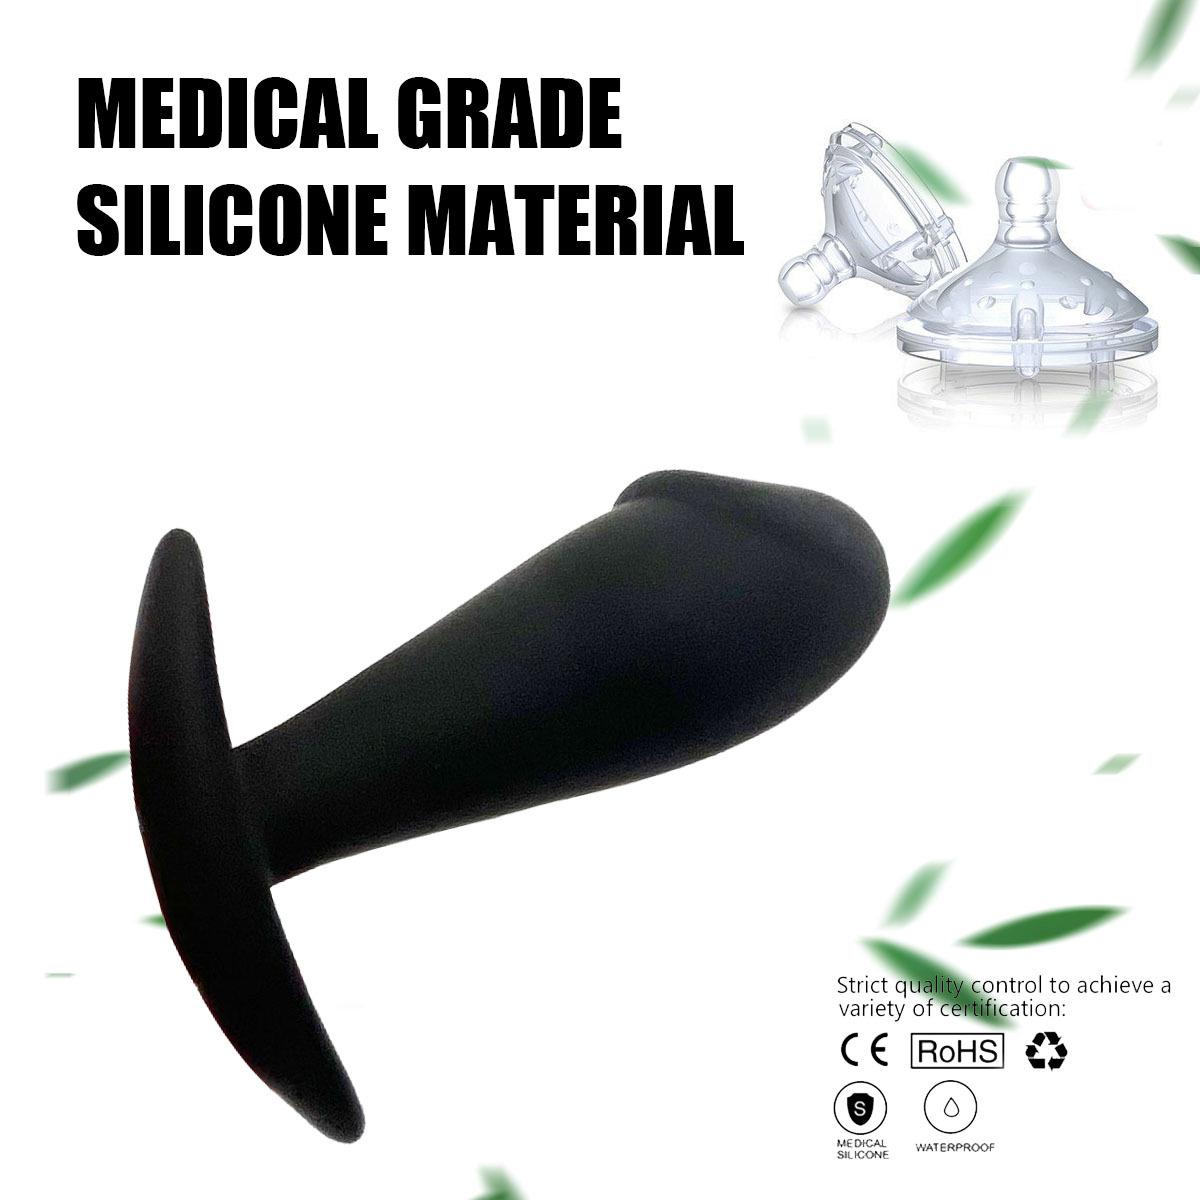 Silicone simulated penis SM anal plug